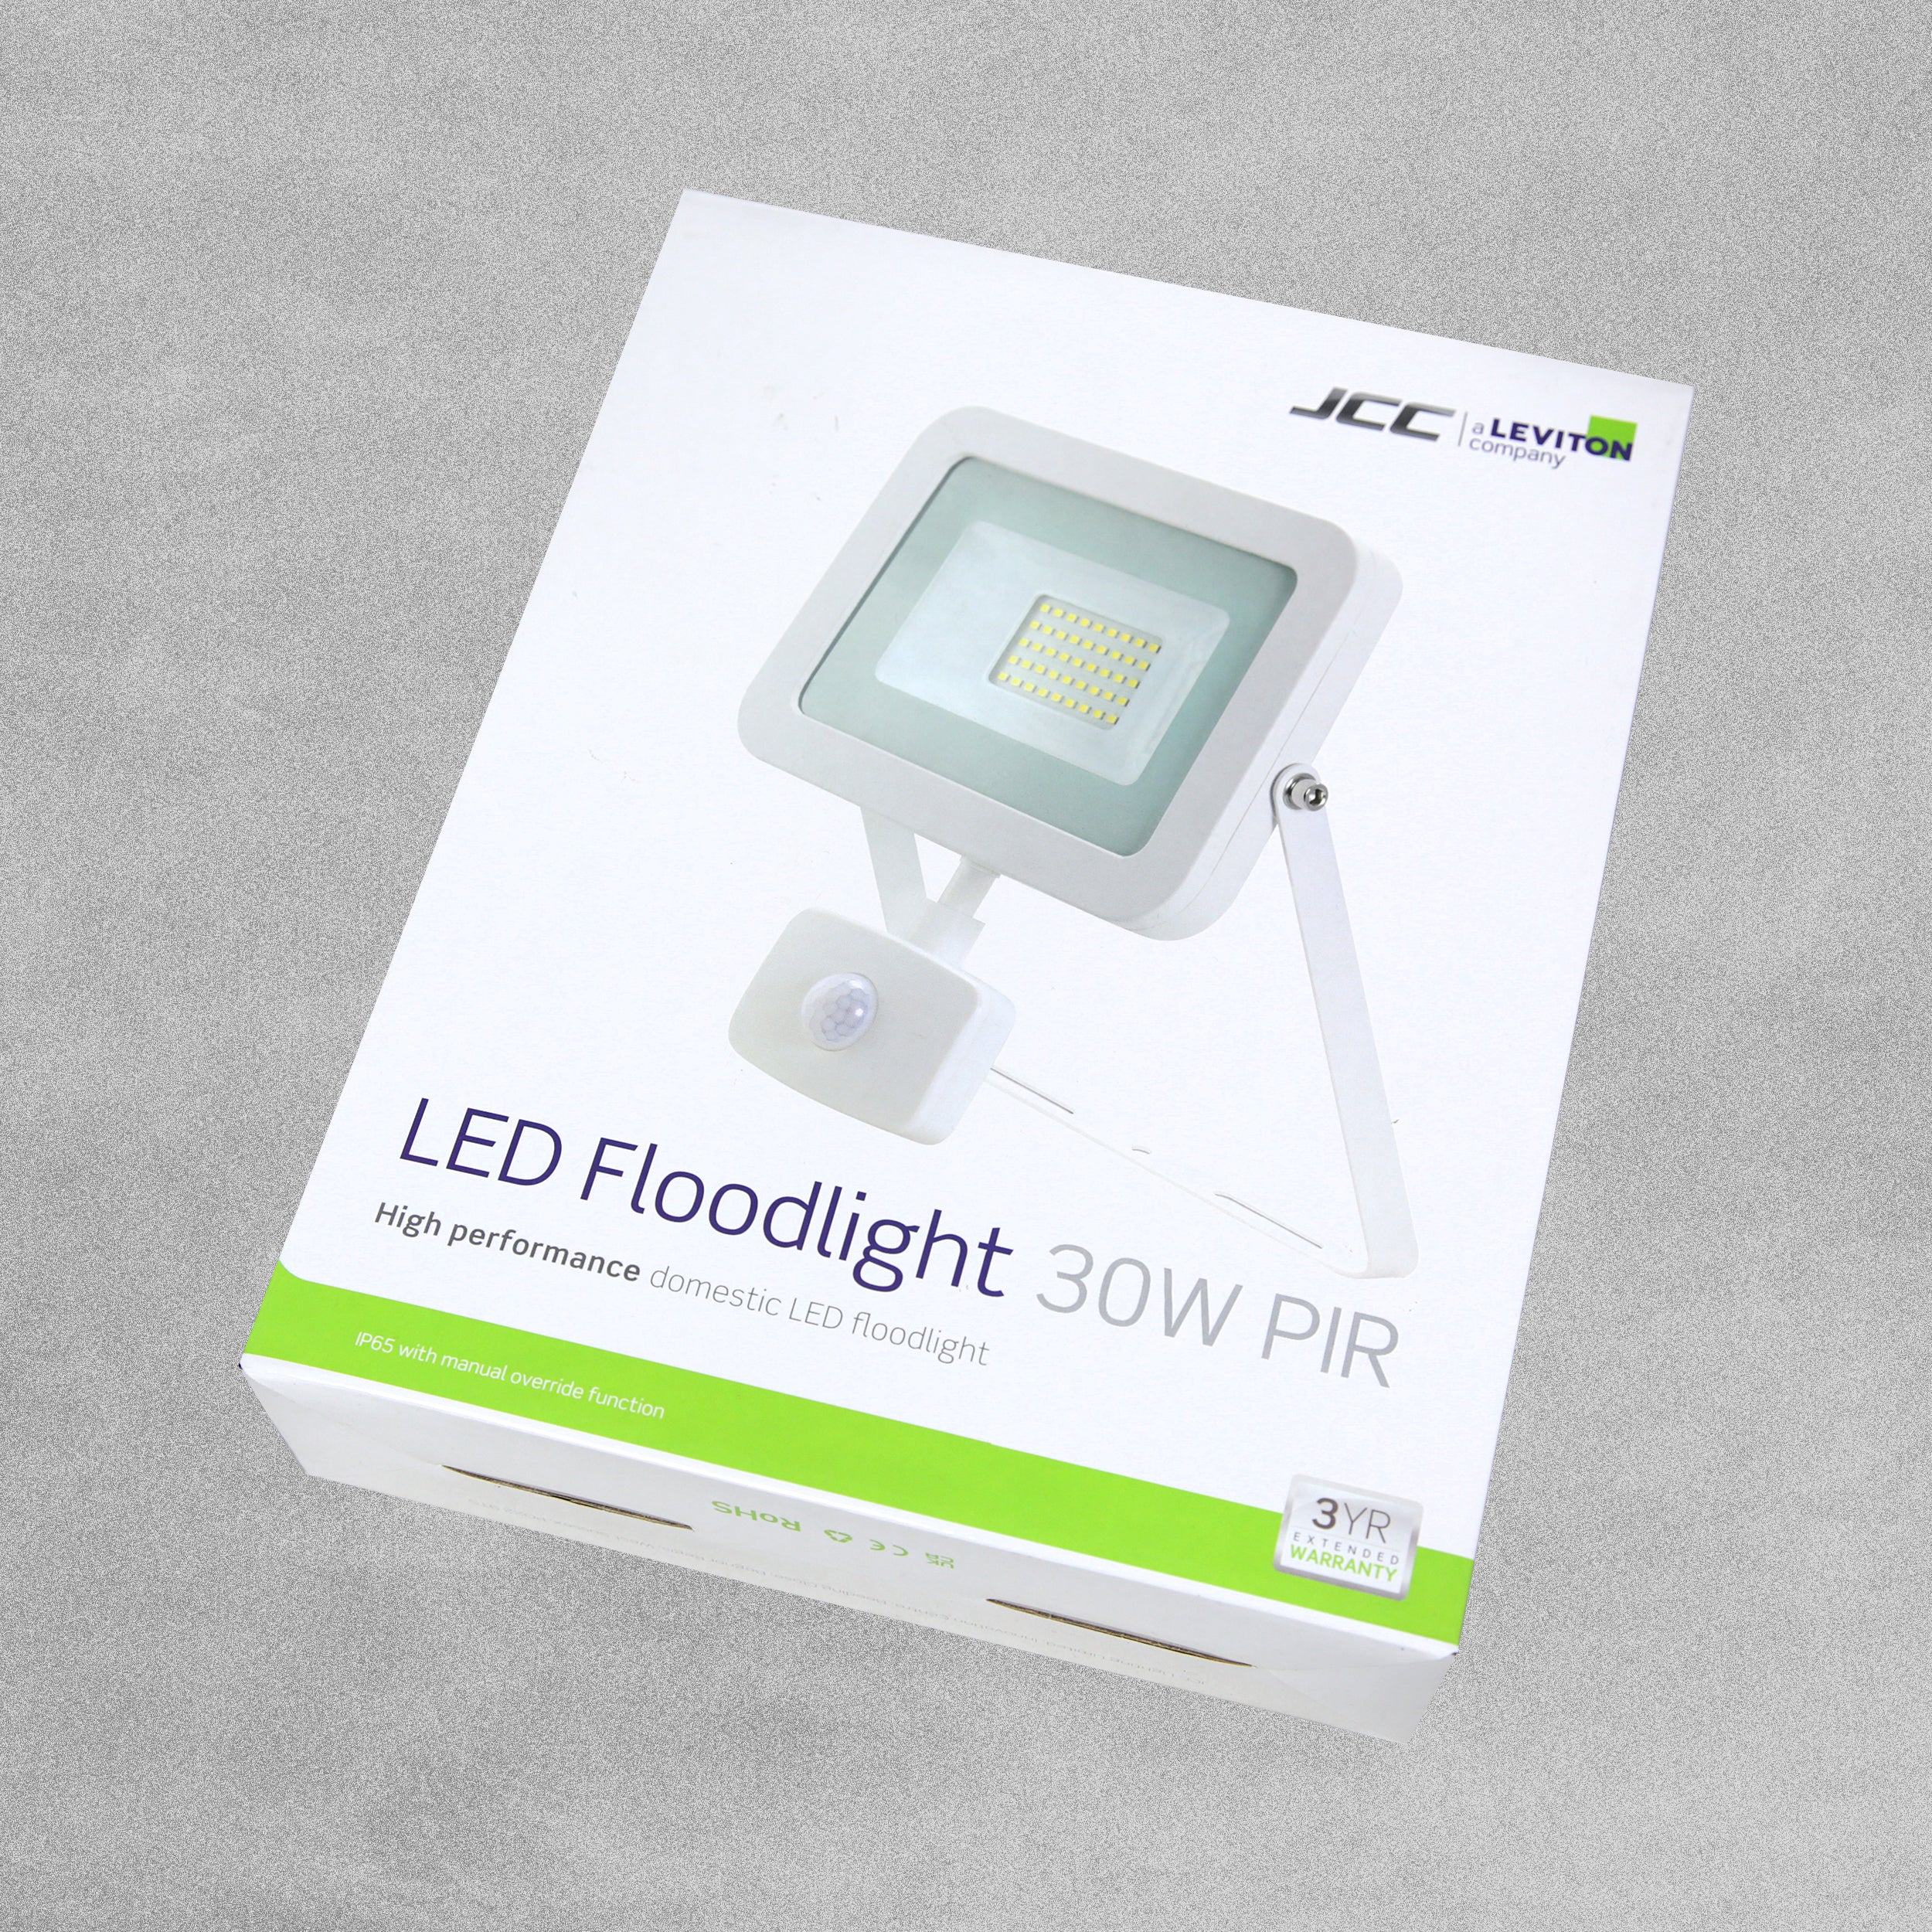 JCC LED Domestic Floodlight 30W PIR 2800 Lumens 93LpcW IP65 - White